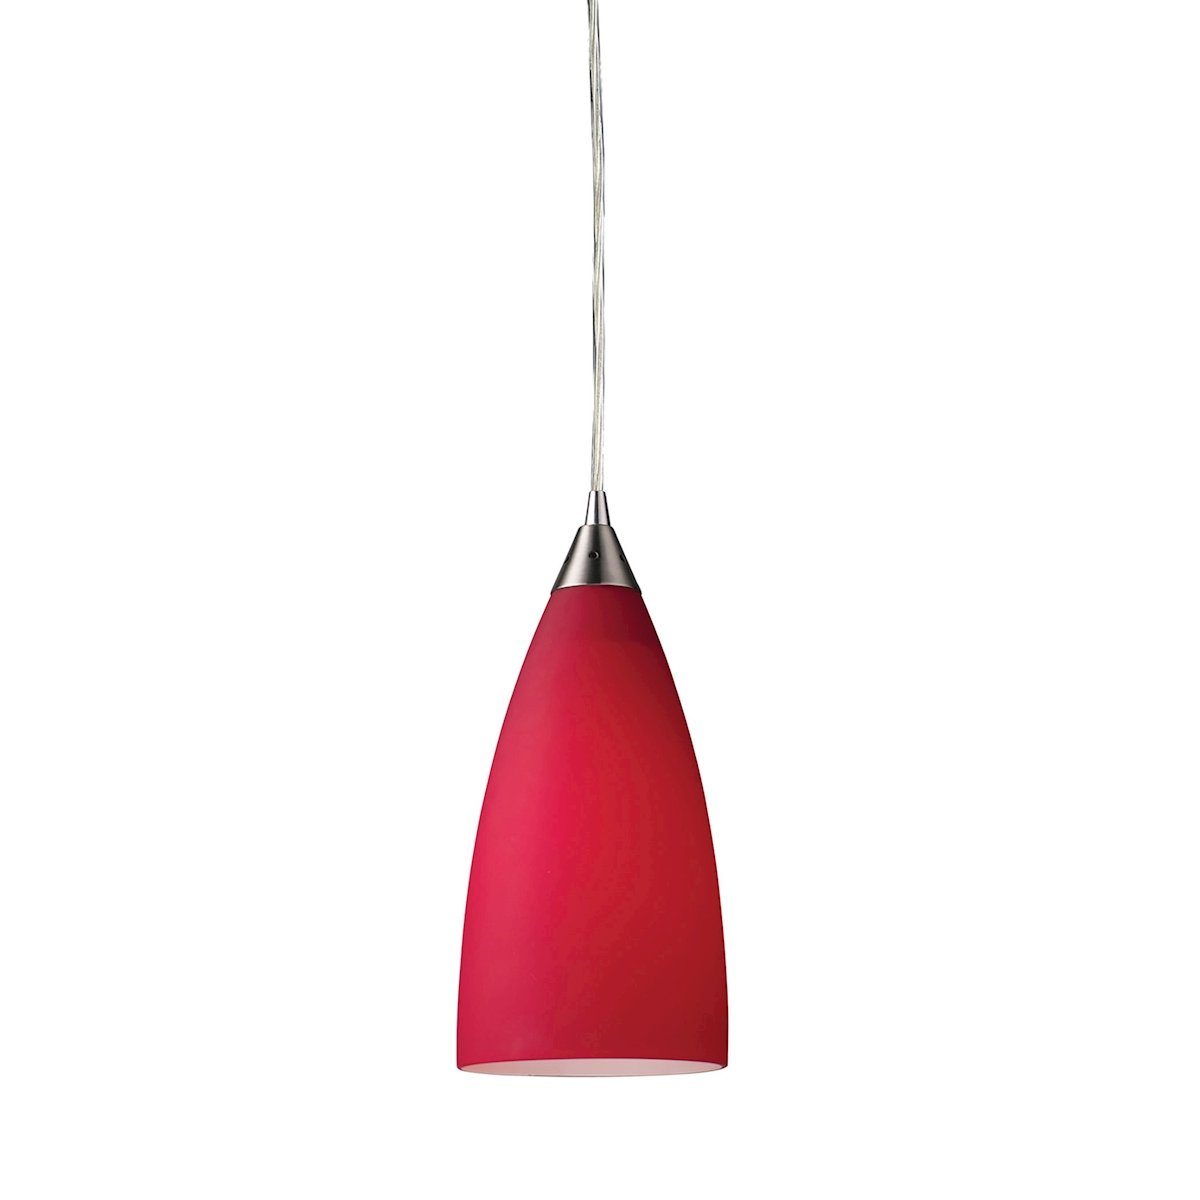 Vesta Pendant In Satin Nickel And Cardinal Red Glass Ceiling Elk Lighting 